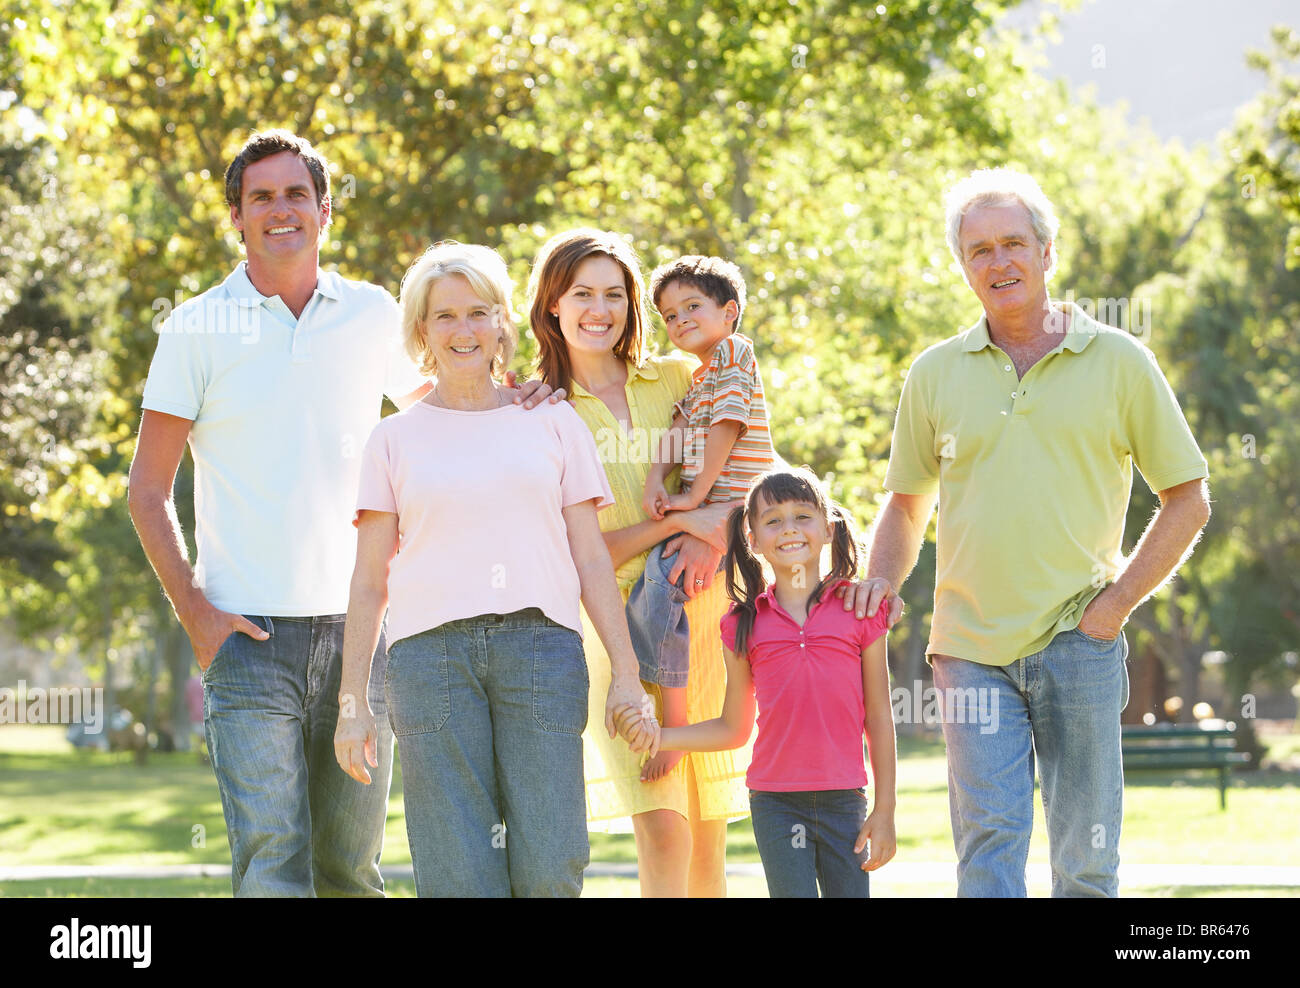 Extended Group Portrait Of Family Enjoying Walk In Park Stock Photo